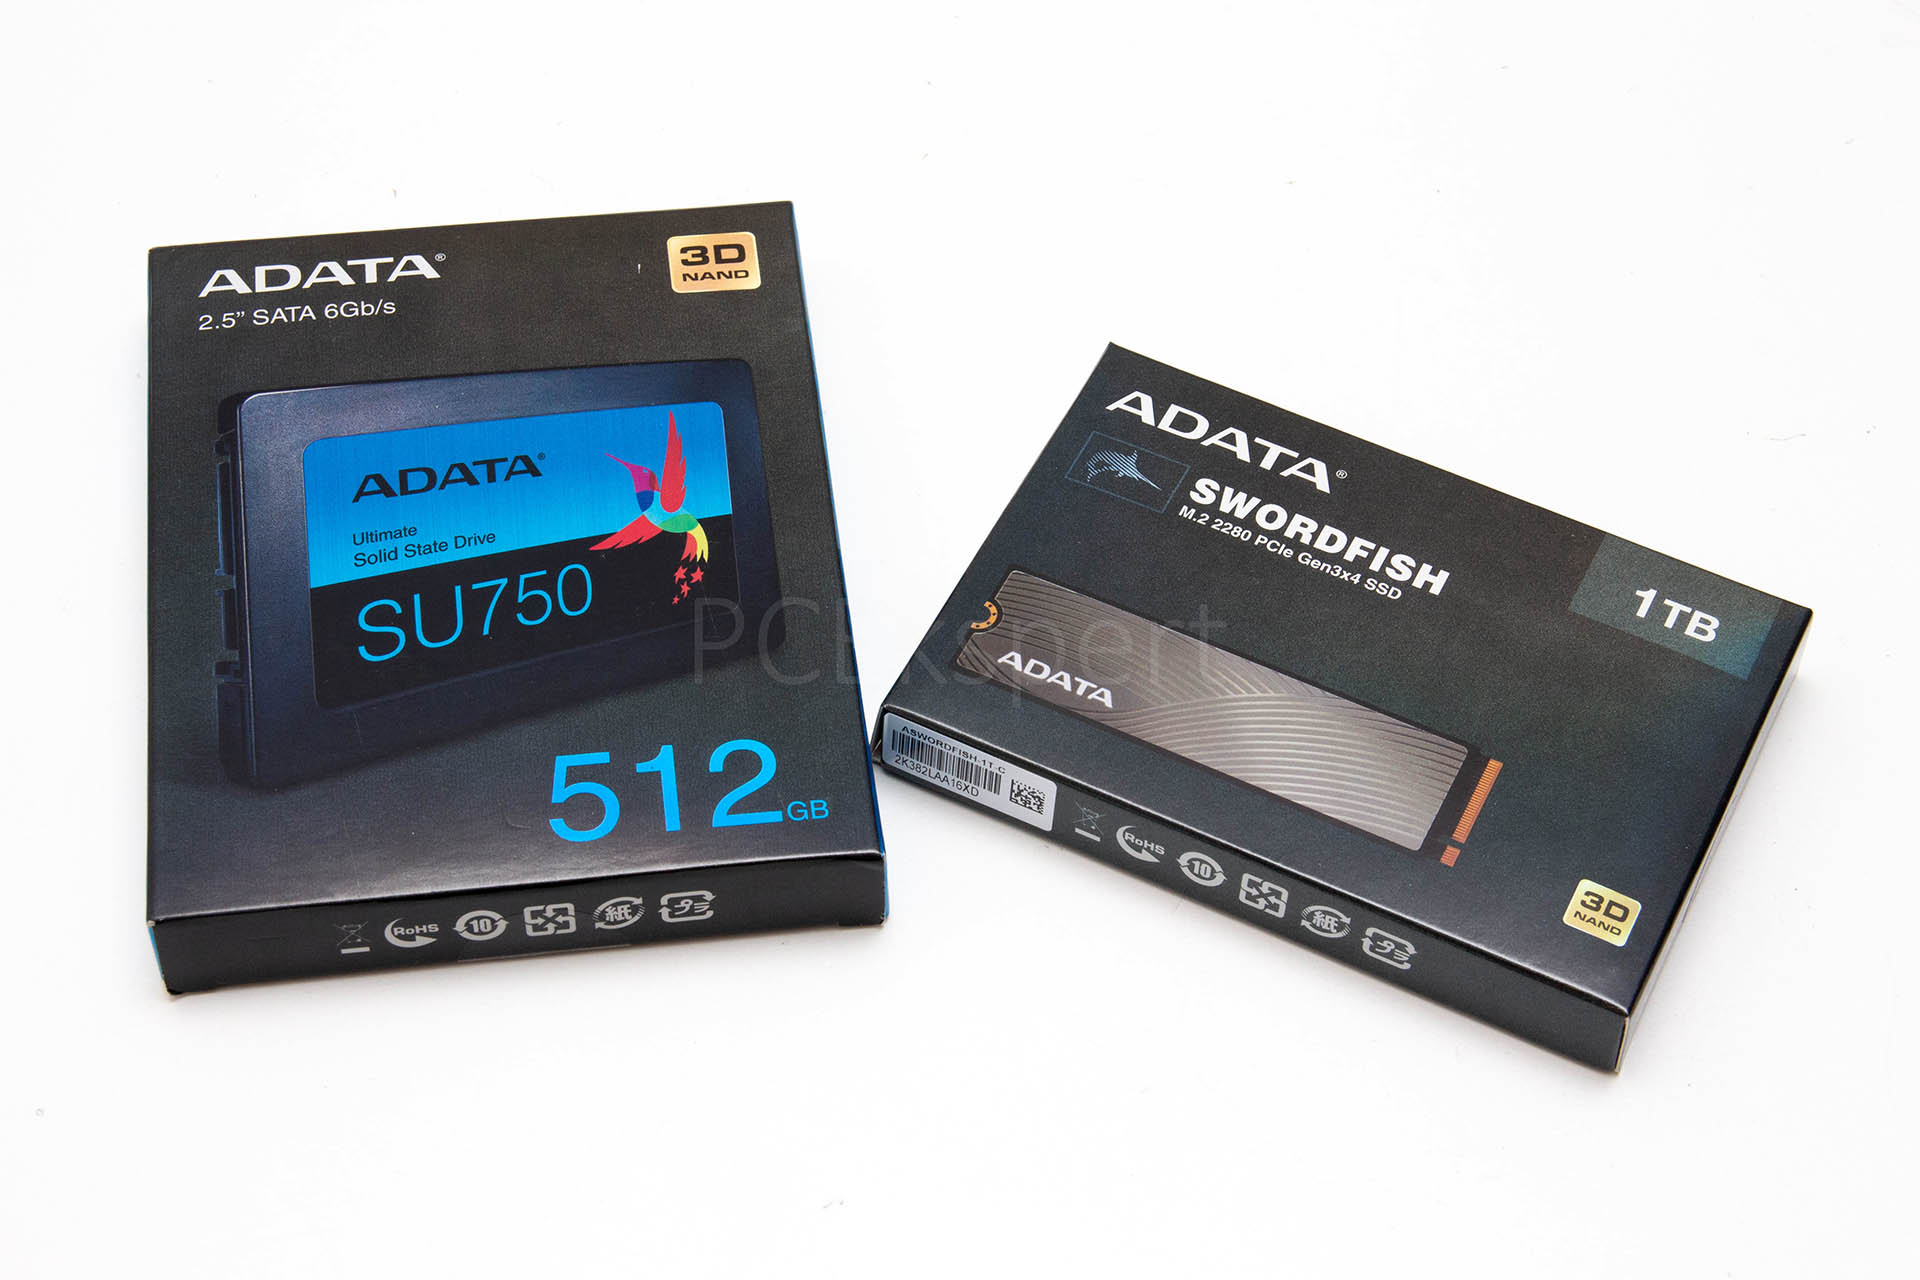 Brzi test – ADATA Swordfish 1TB & SU750 512GB